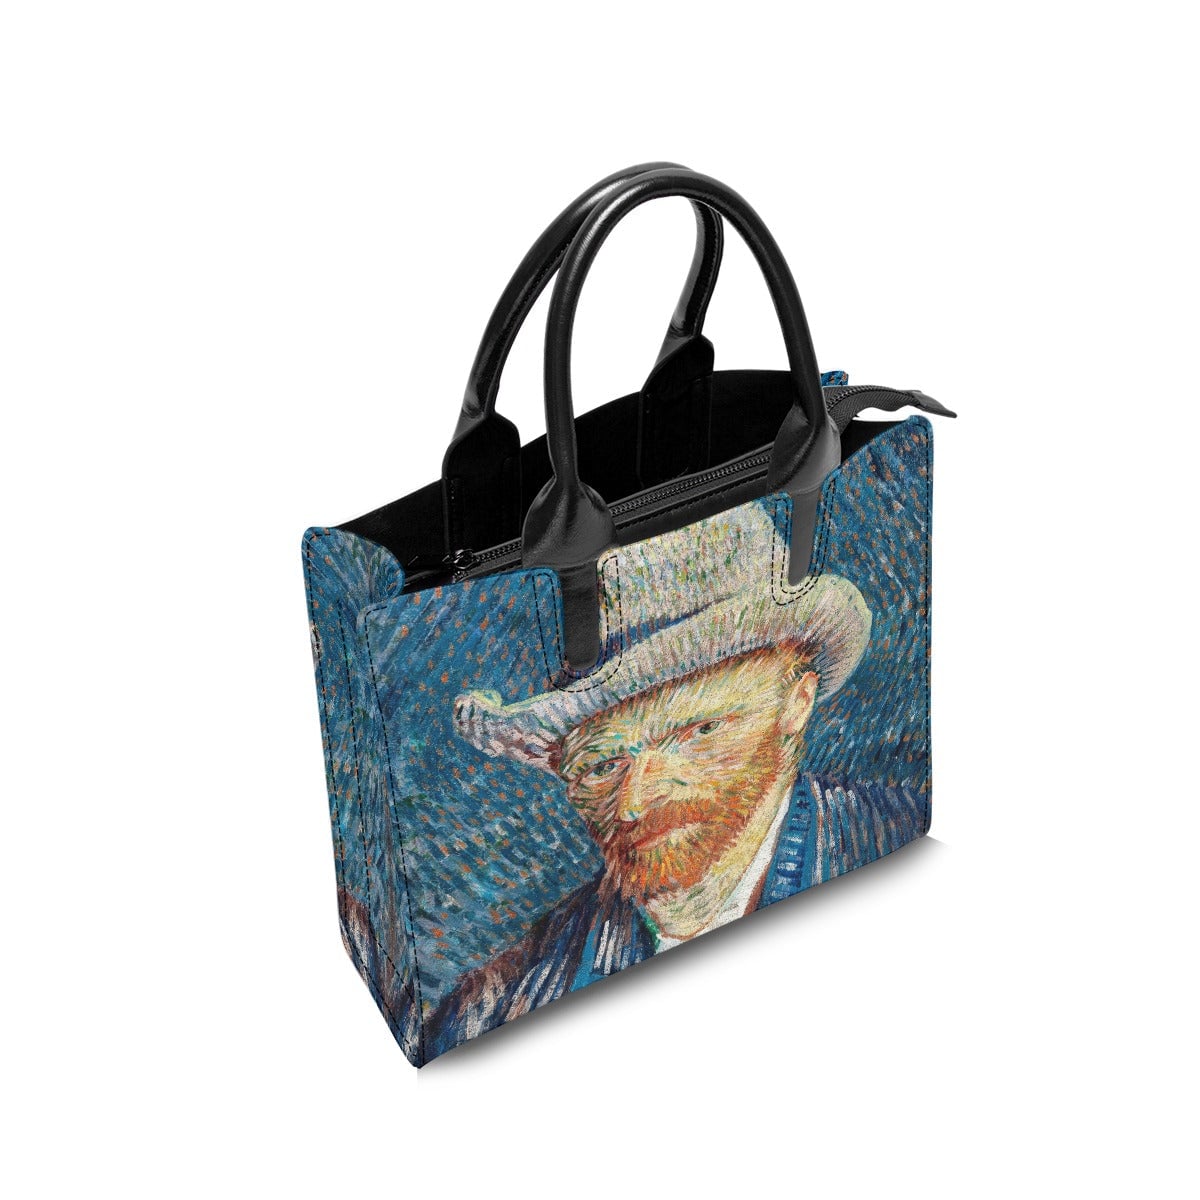 Self-Portrait with Grey Felt Hat Van Gogh Handbag